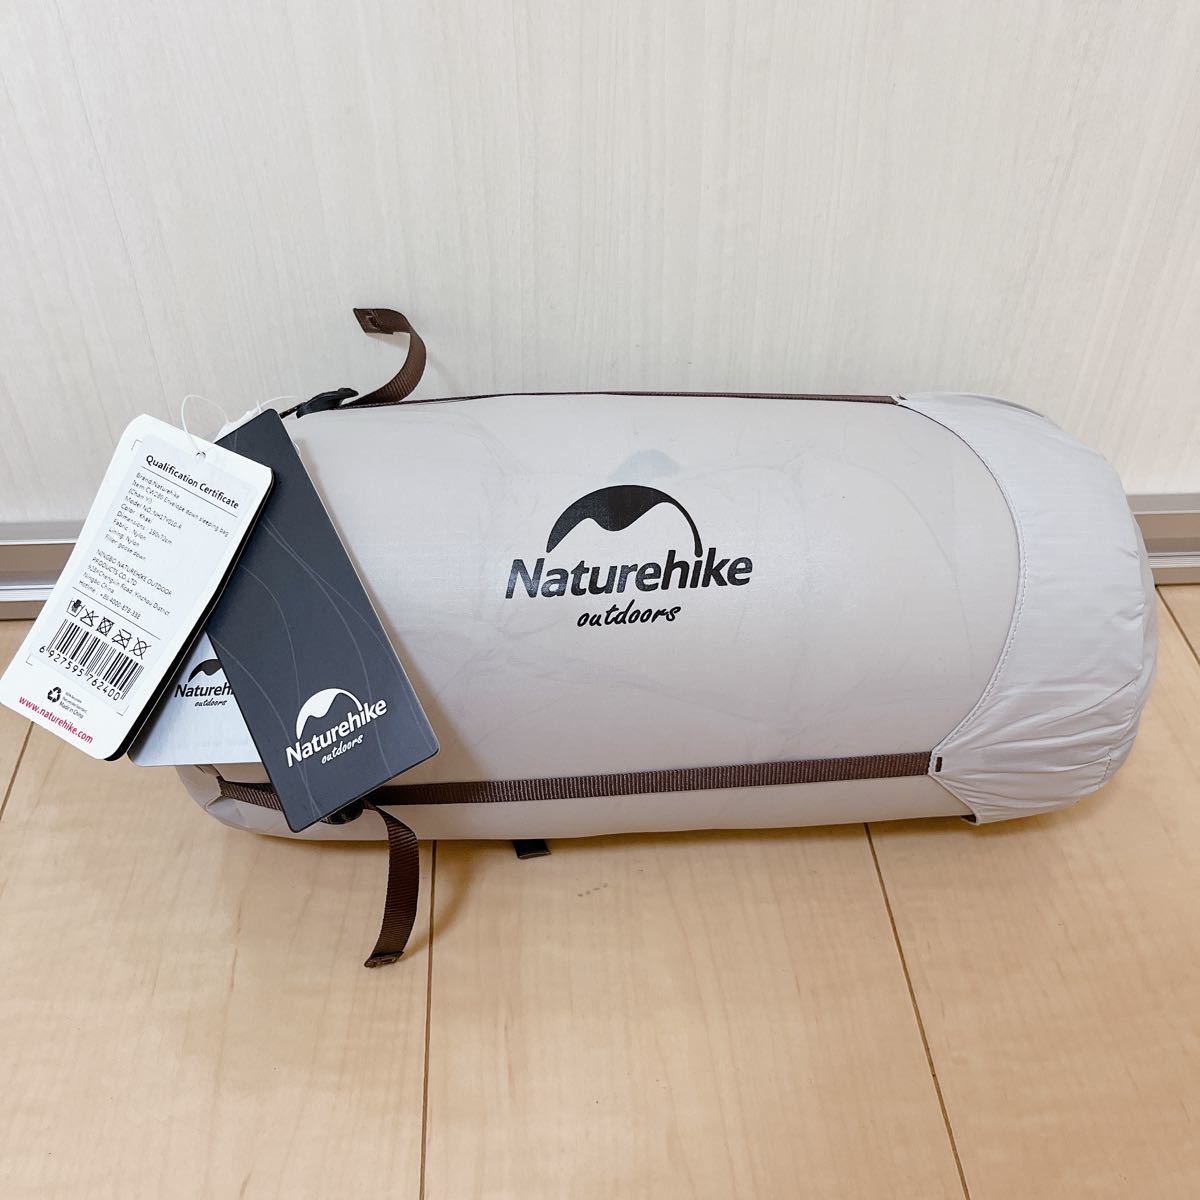 Naturehike 寝袋 ダウン 封筒型 シュラフ 超軽量 快適温度11度 保温 800FP コンパクト アウトドア キャンプ